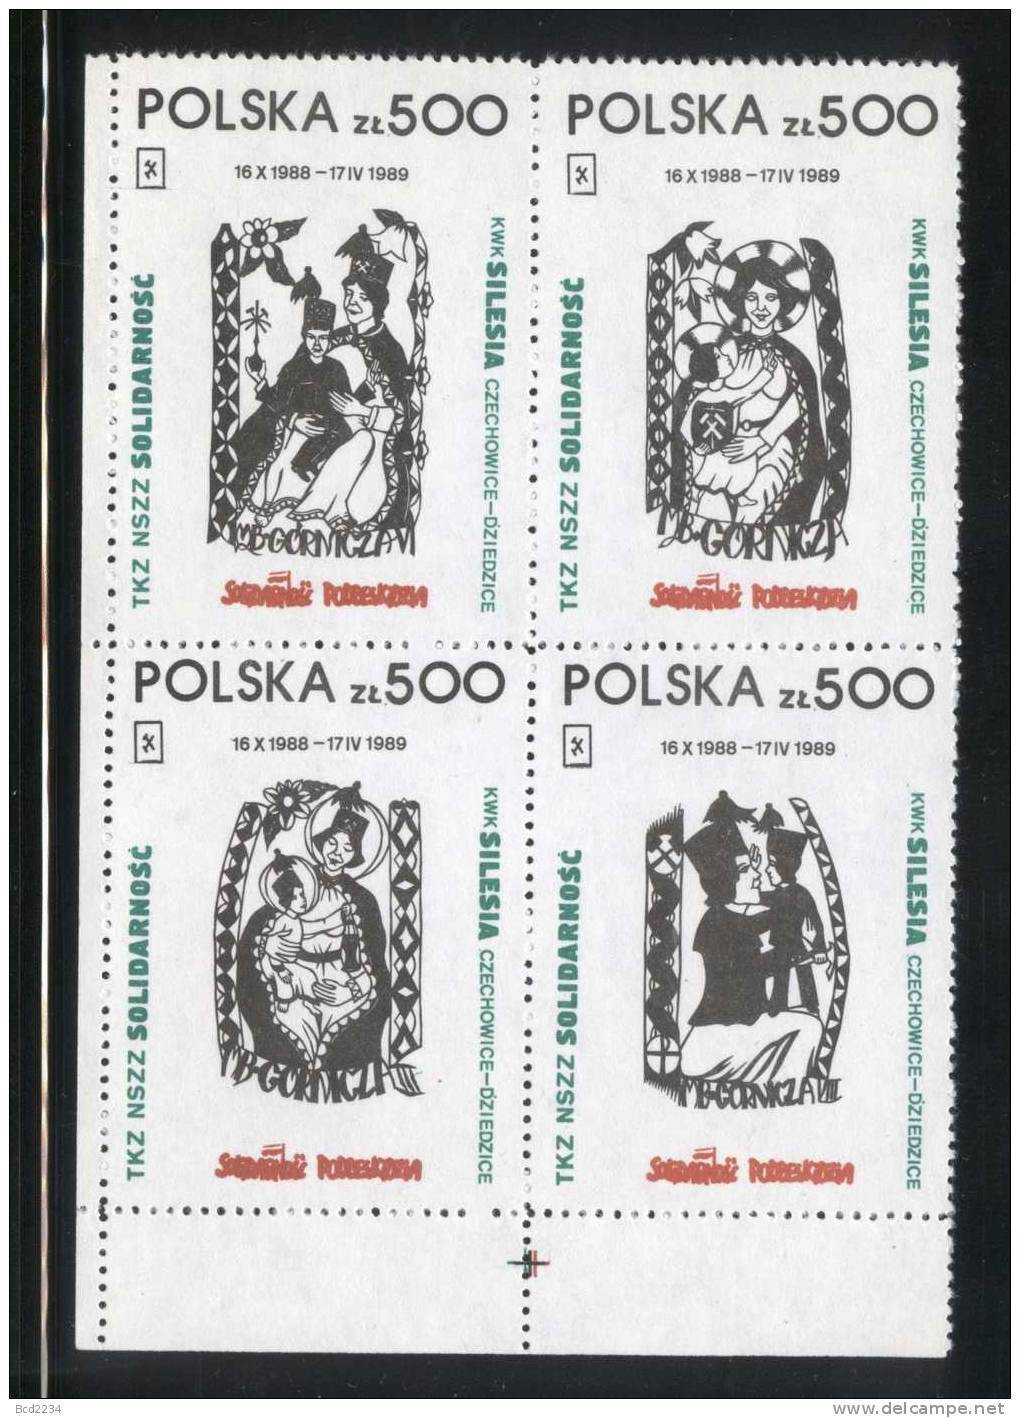 POLAND SOLIDARNOSC (TKZ NSZZ SOLIDARNOSC) 1989 RELIGIOUS SCENES MADONNAS BLOCK OF 4 CANCELLED (SOLID0779/1356) - Solidarnosc-Vignetten